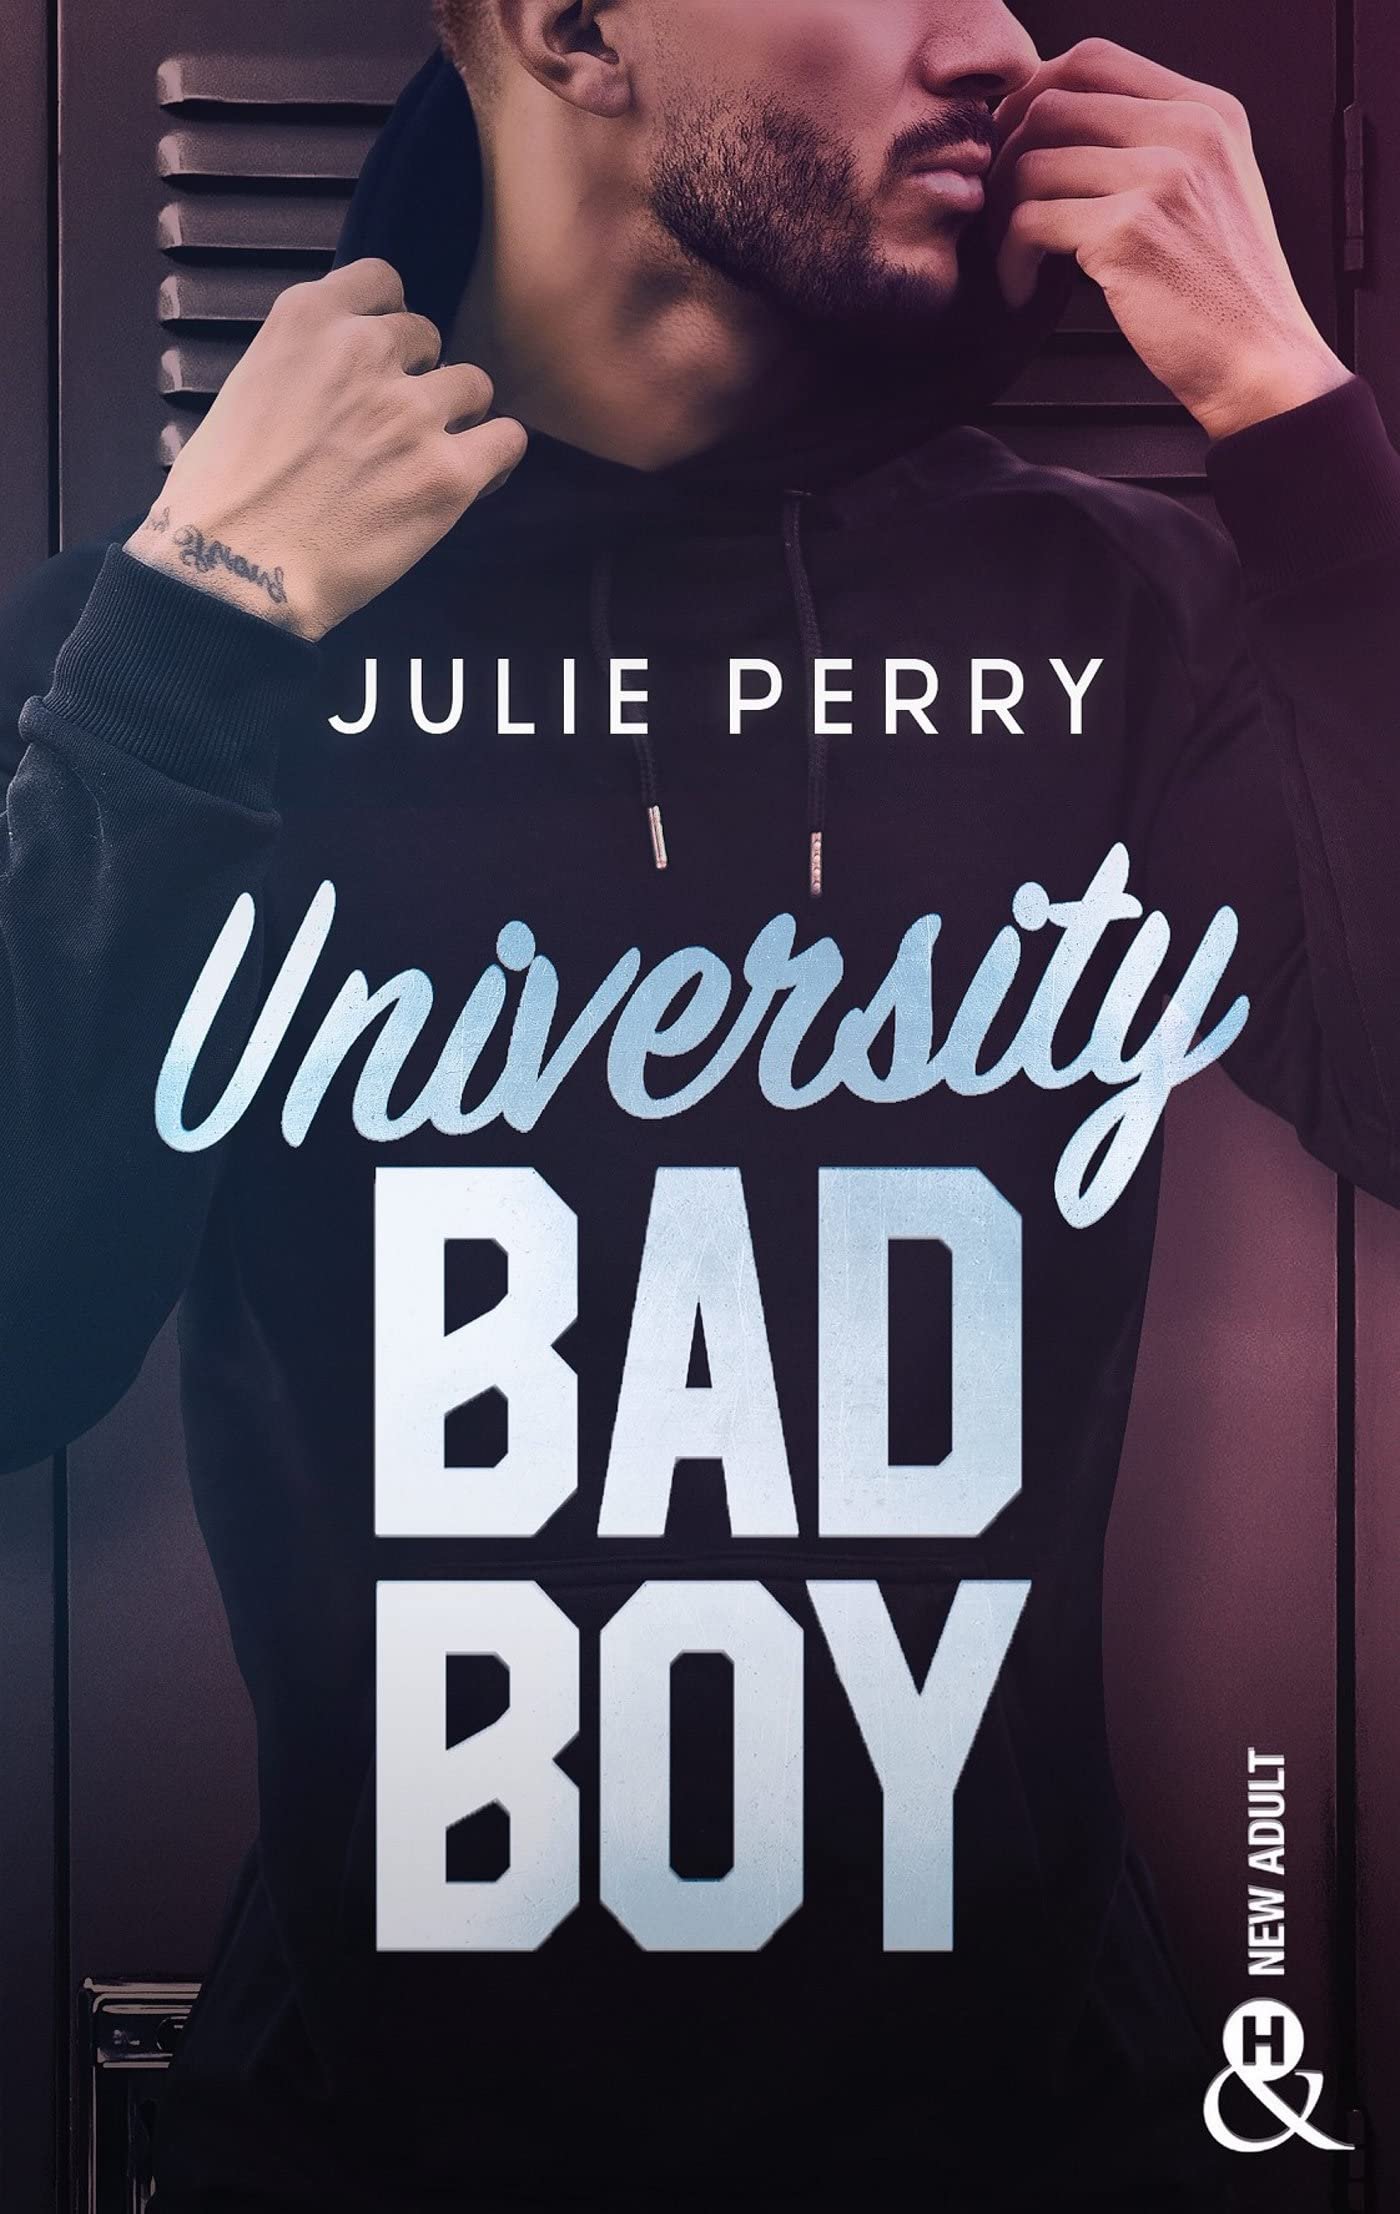 Julie Perry – University Bad Boy